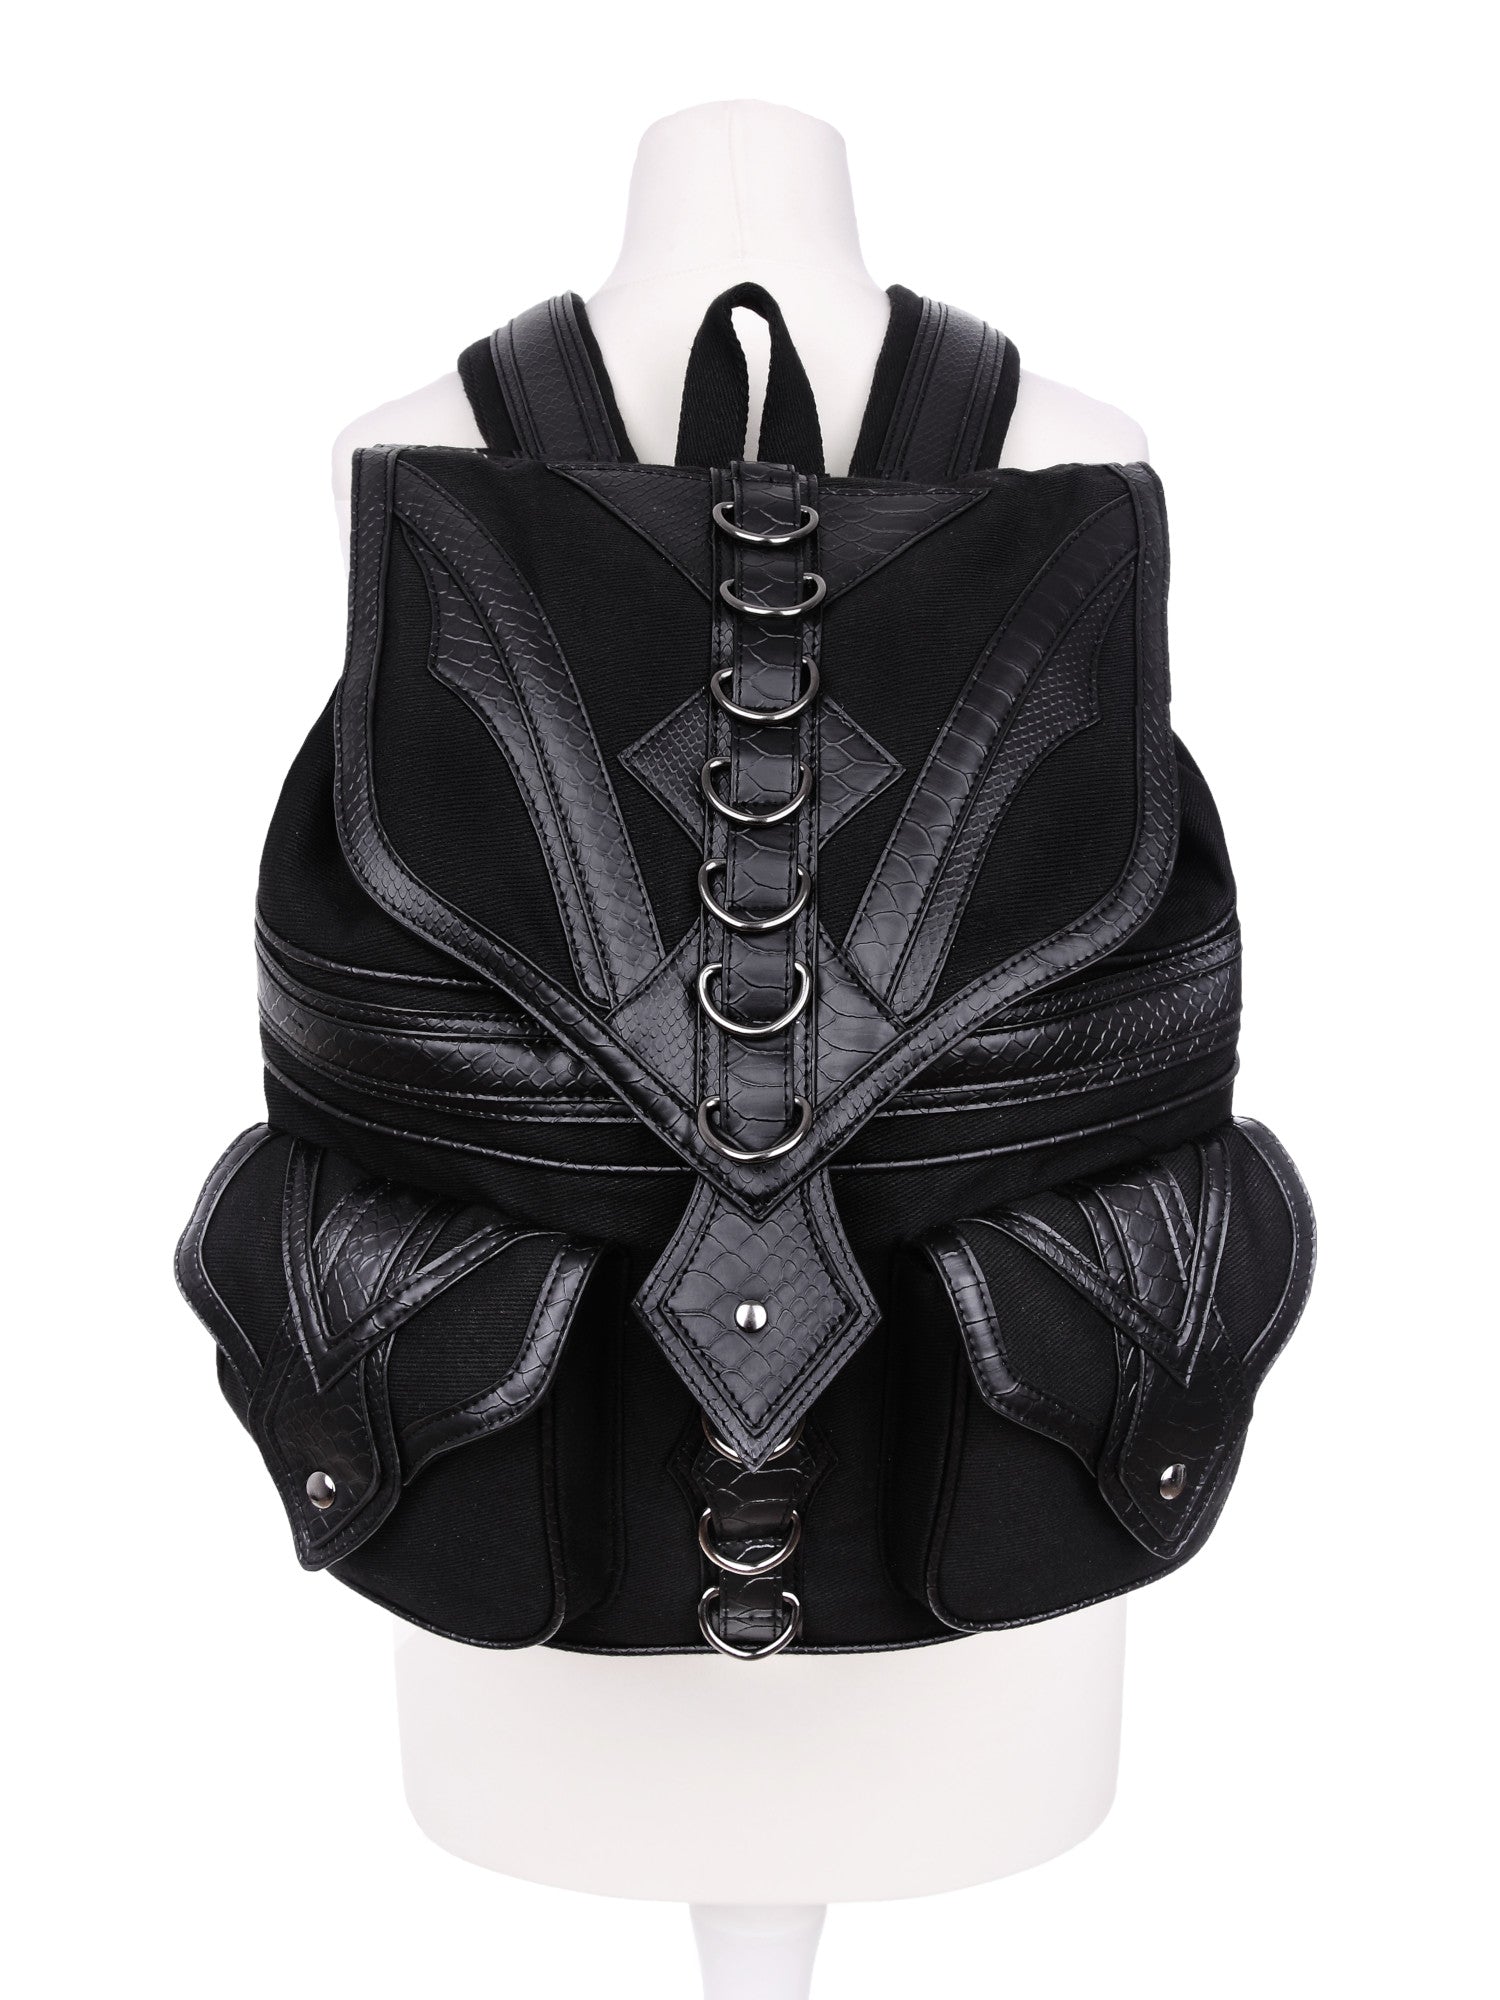 Maleficent Dragon Diaper Backpack Gothic Goth Disneybound 